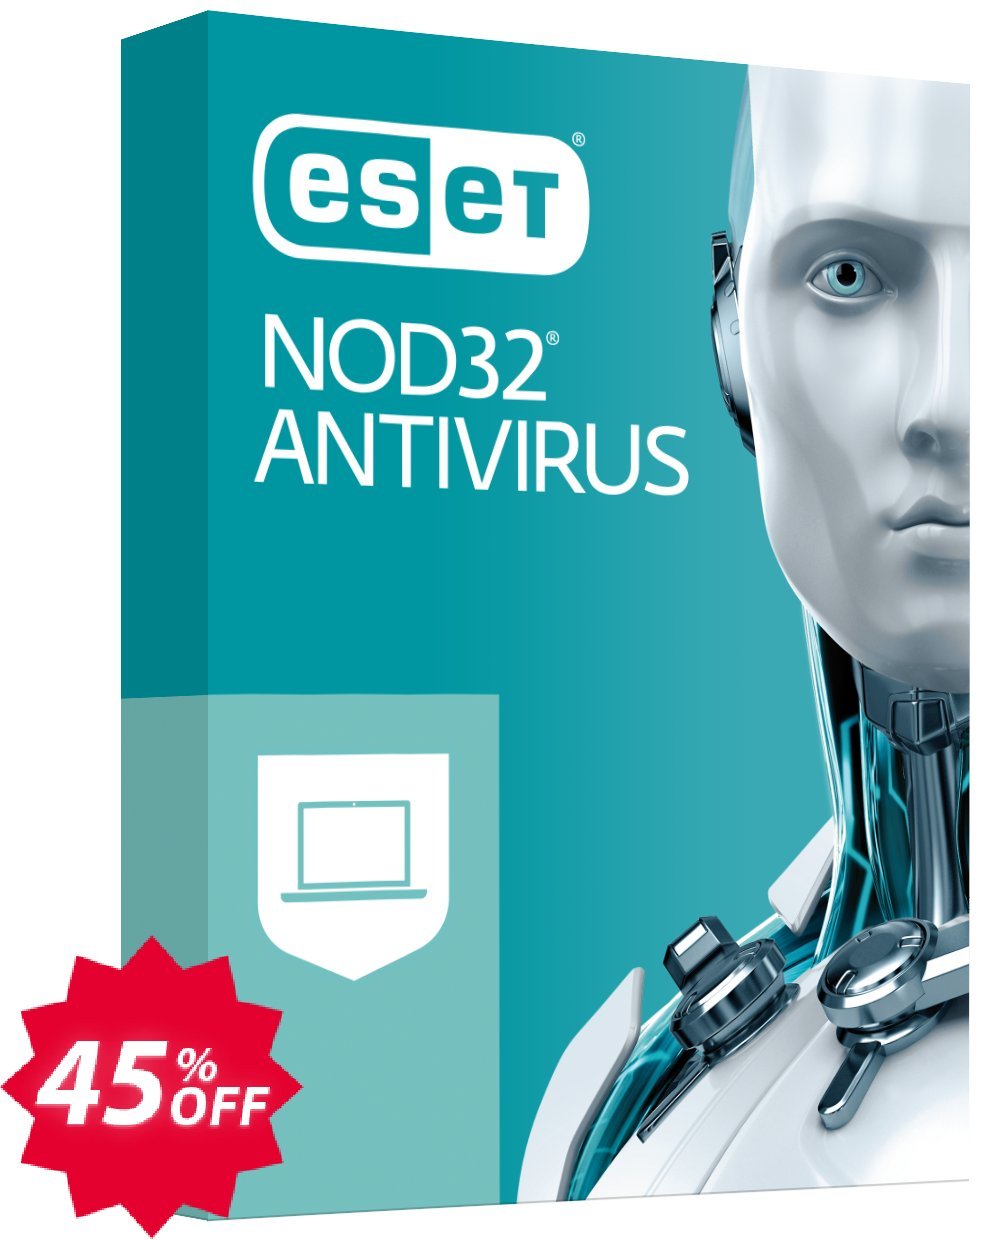 ESET NOD32 Antivirus - Renew 3 Years 4 Devices Coupon code 45% discount 